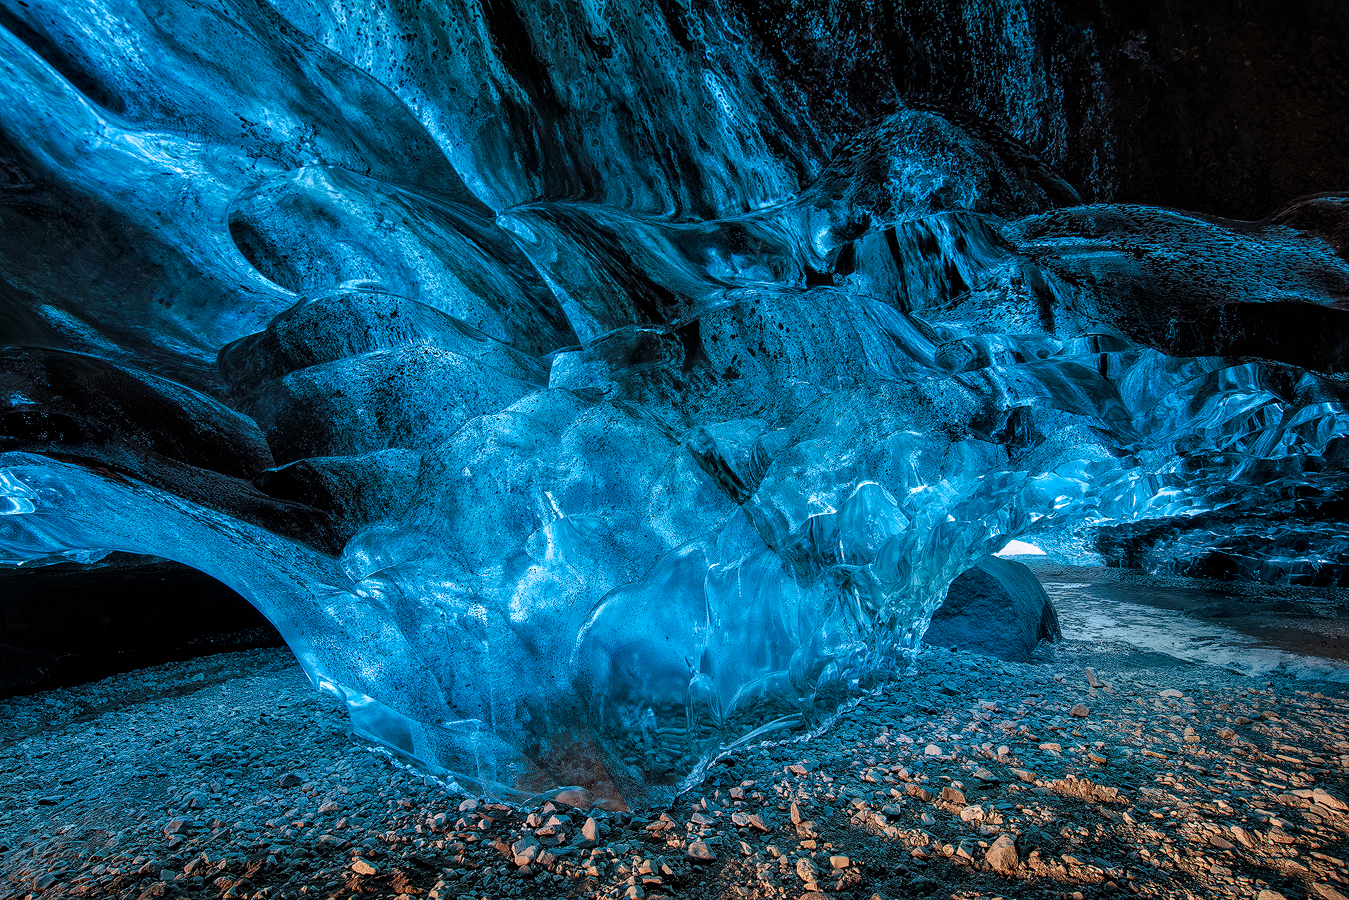 iceland jokulsarlon ice cave tour